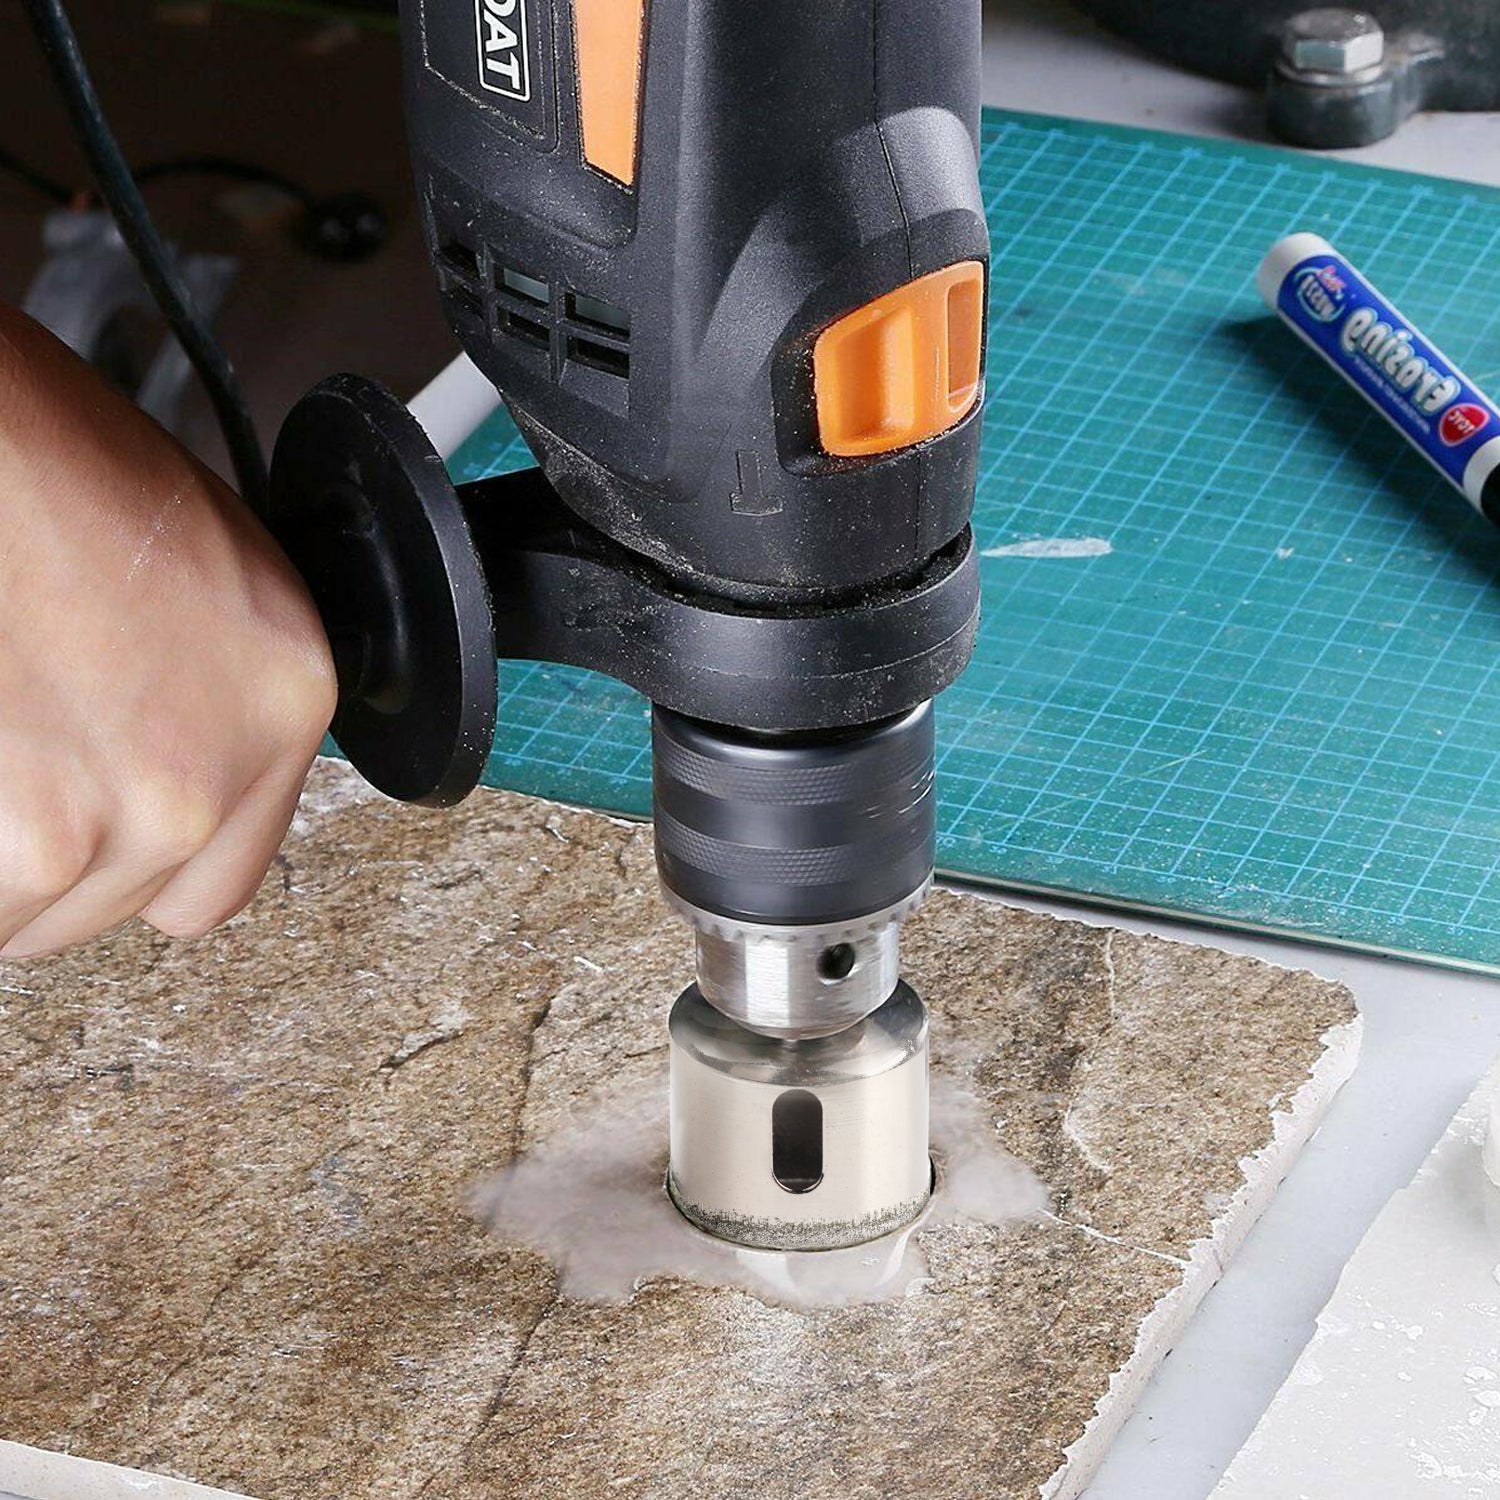 8mm Diamond Hole Saw Kit Tile Drill Bits for Ceramic, Glass, Tile, Porcelain, Marble, Granite